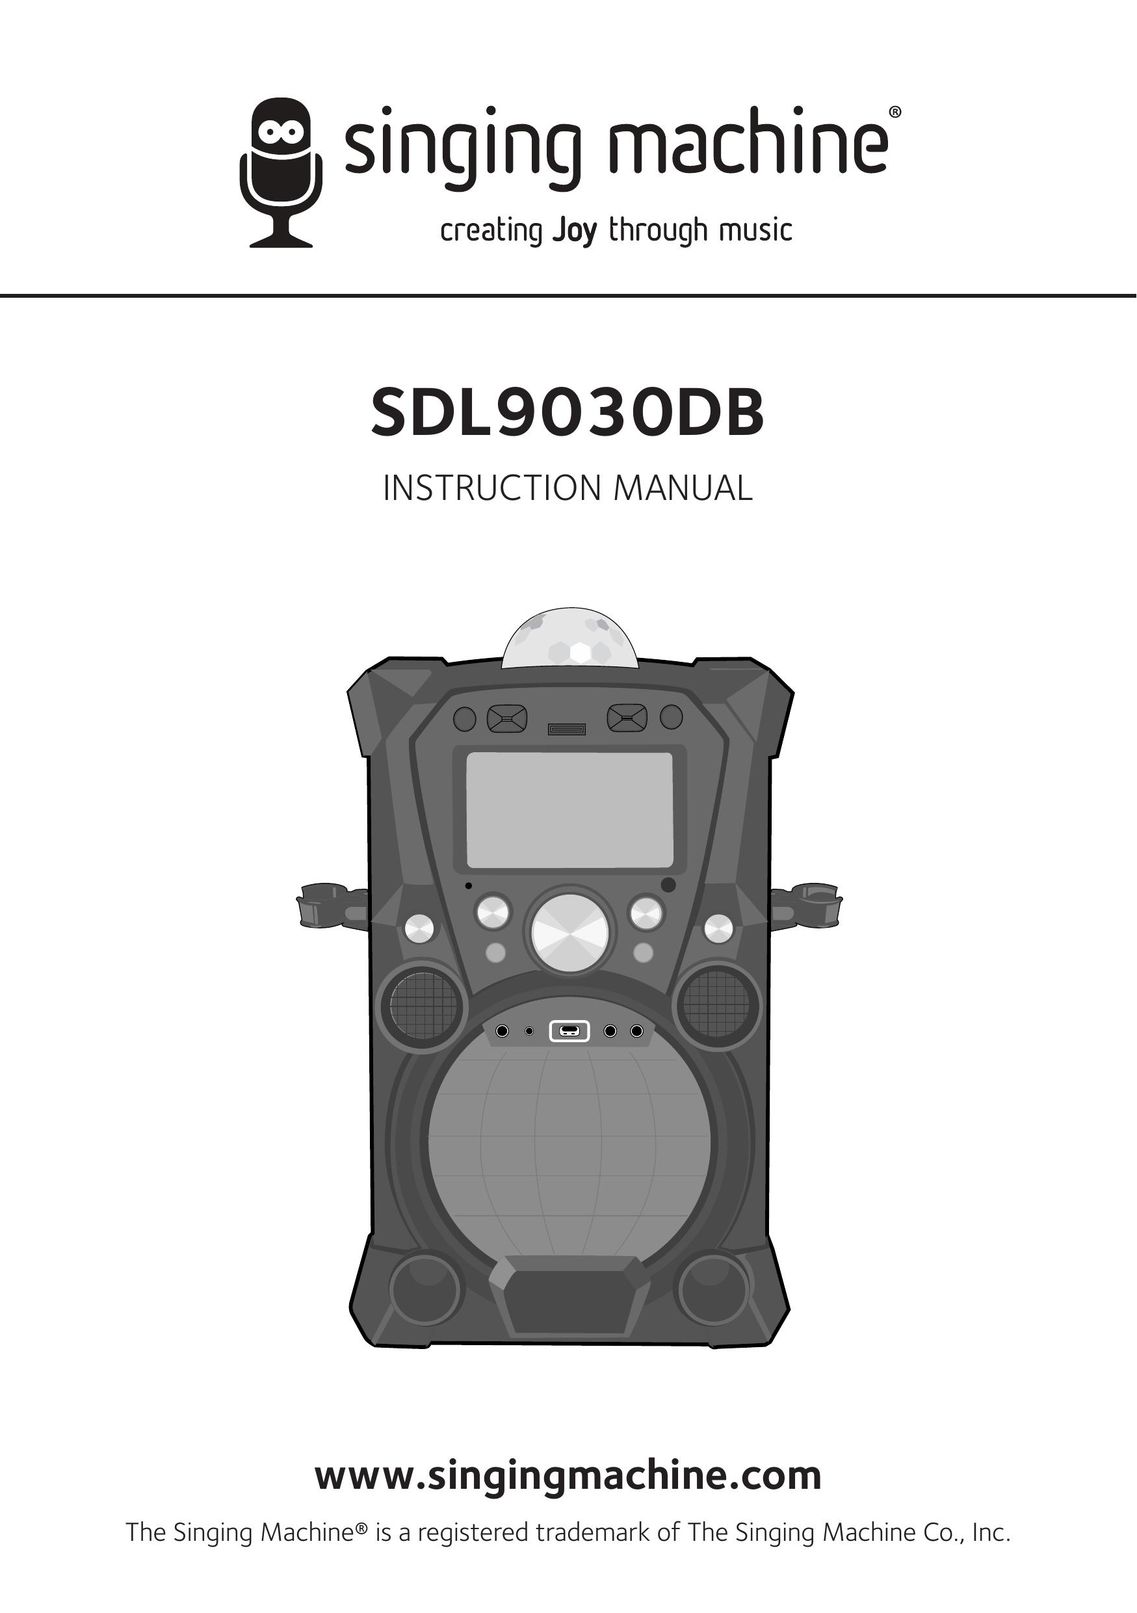 The Singing Machine SDL9030DB Speaker System User Manual